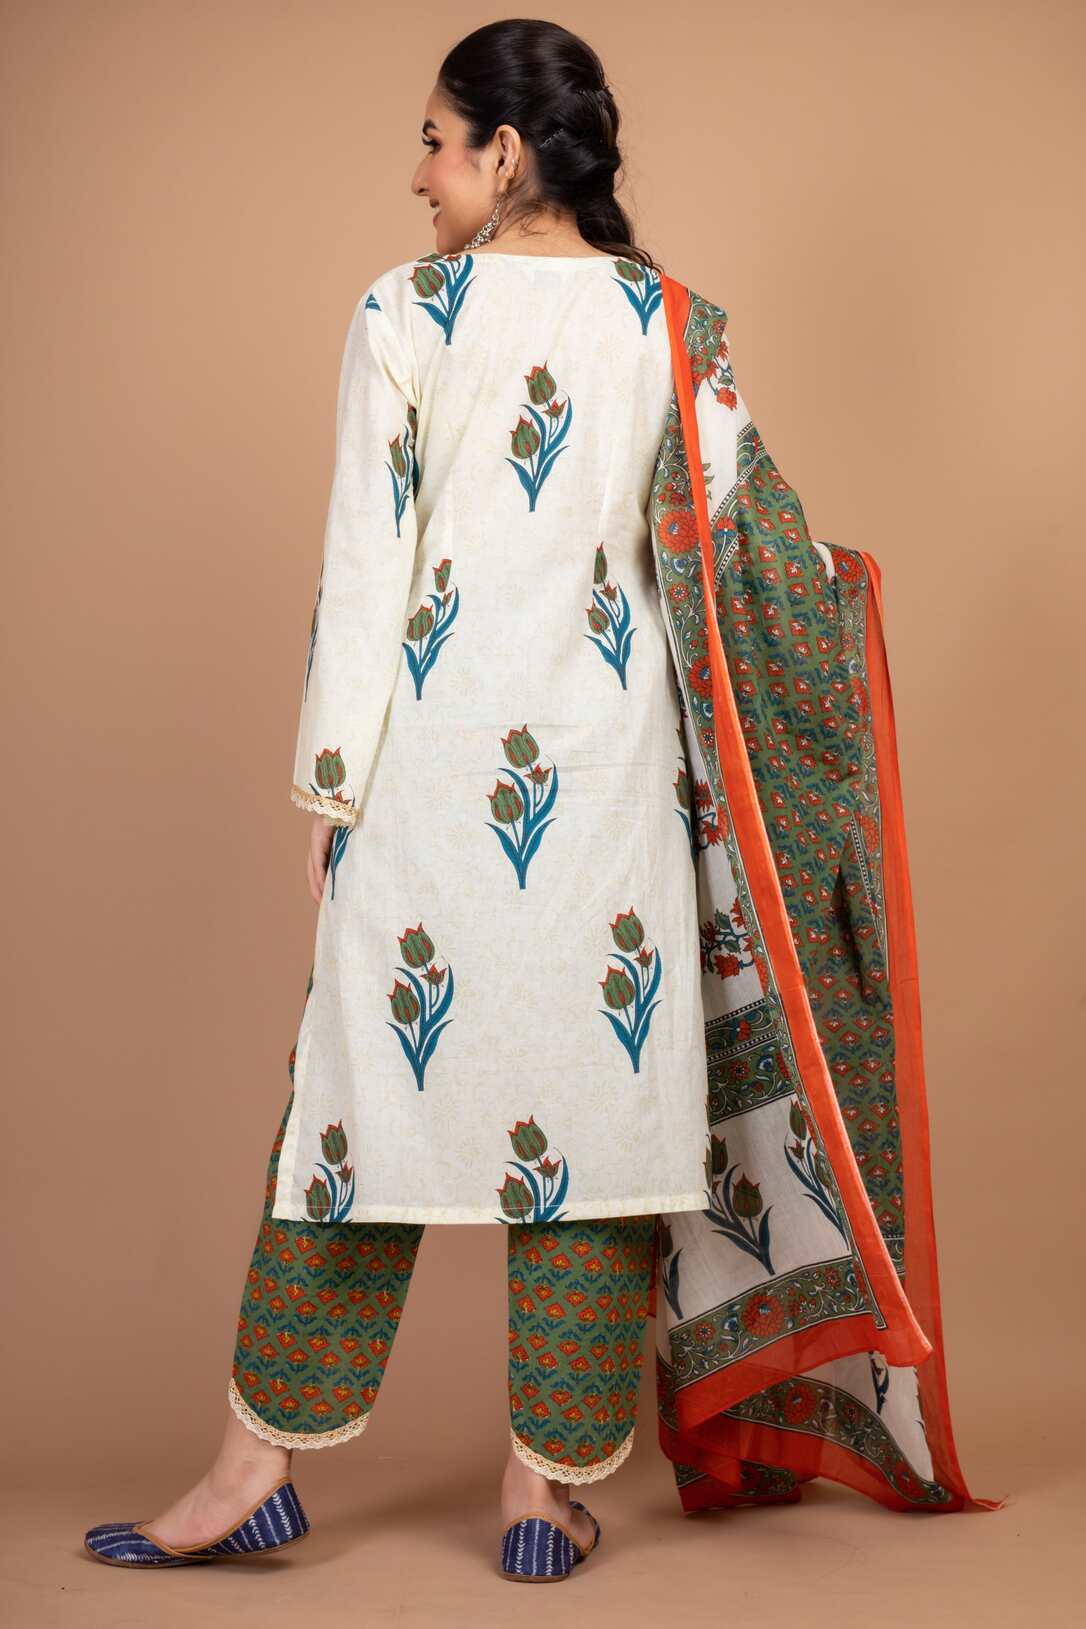 Aarya - Adaara white and green block print Suit Set with Tulip pant and Dupatta - Adaara